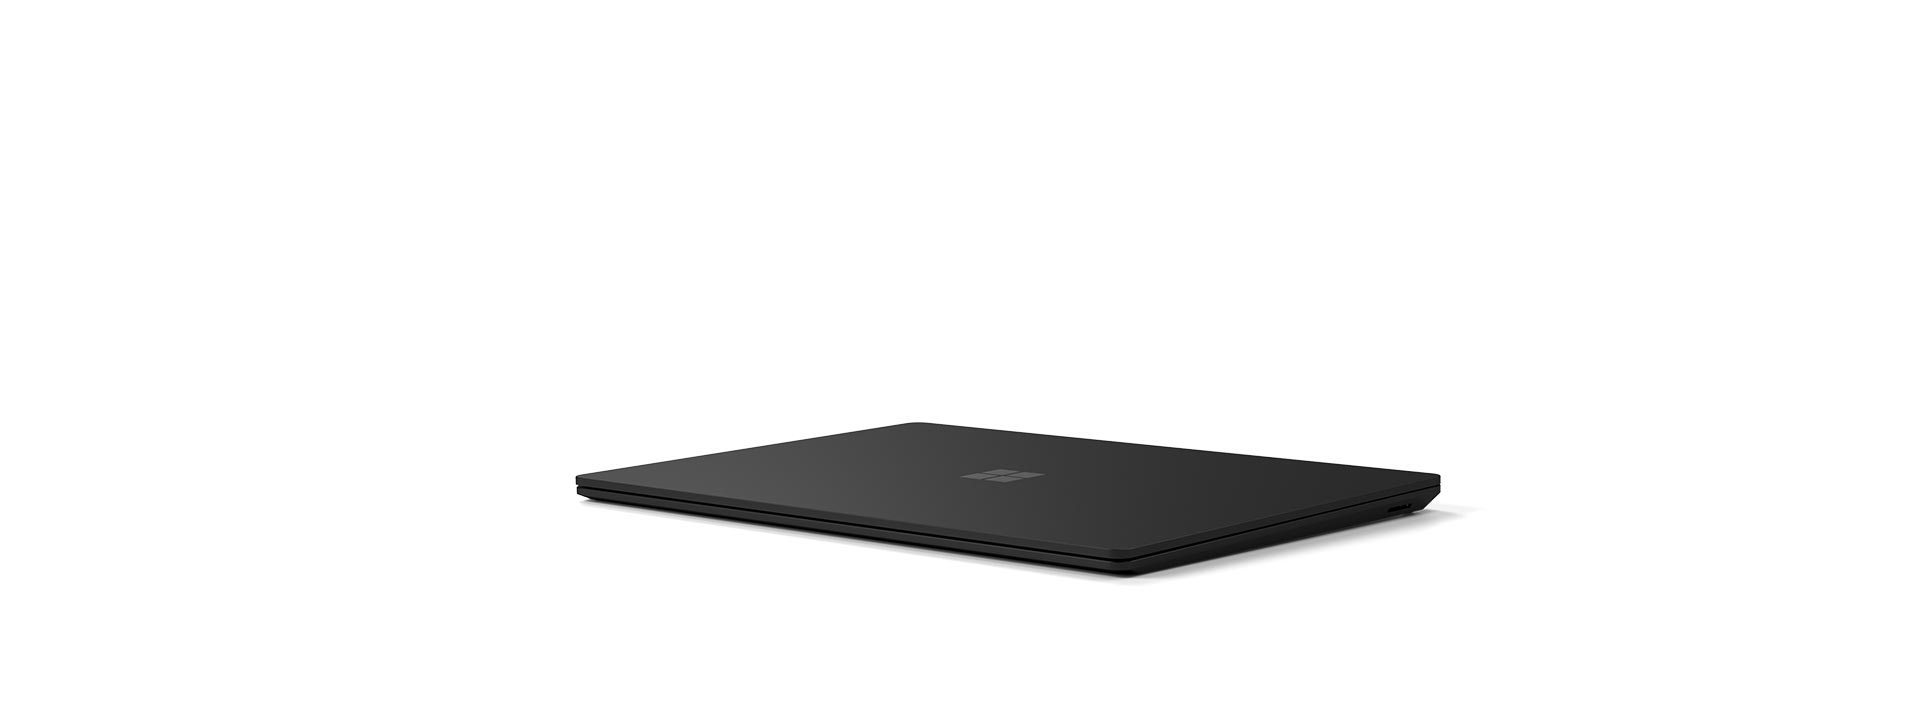 Surface Laptop 4 典雅黑